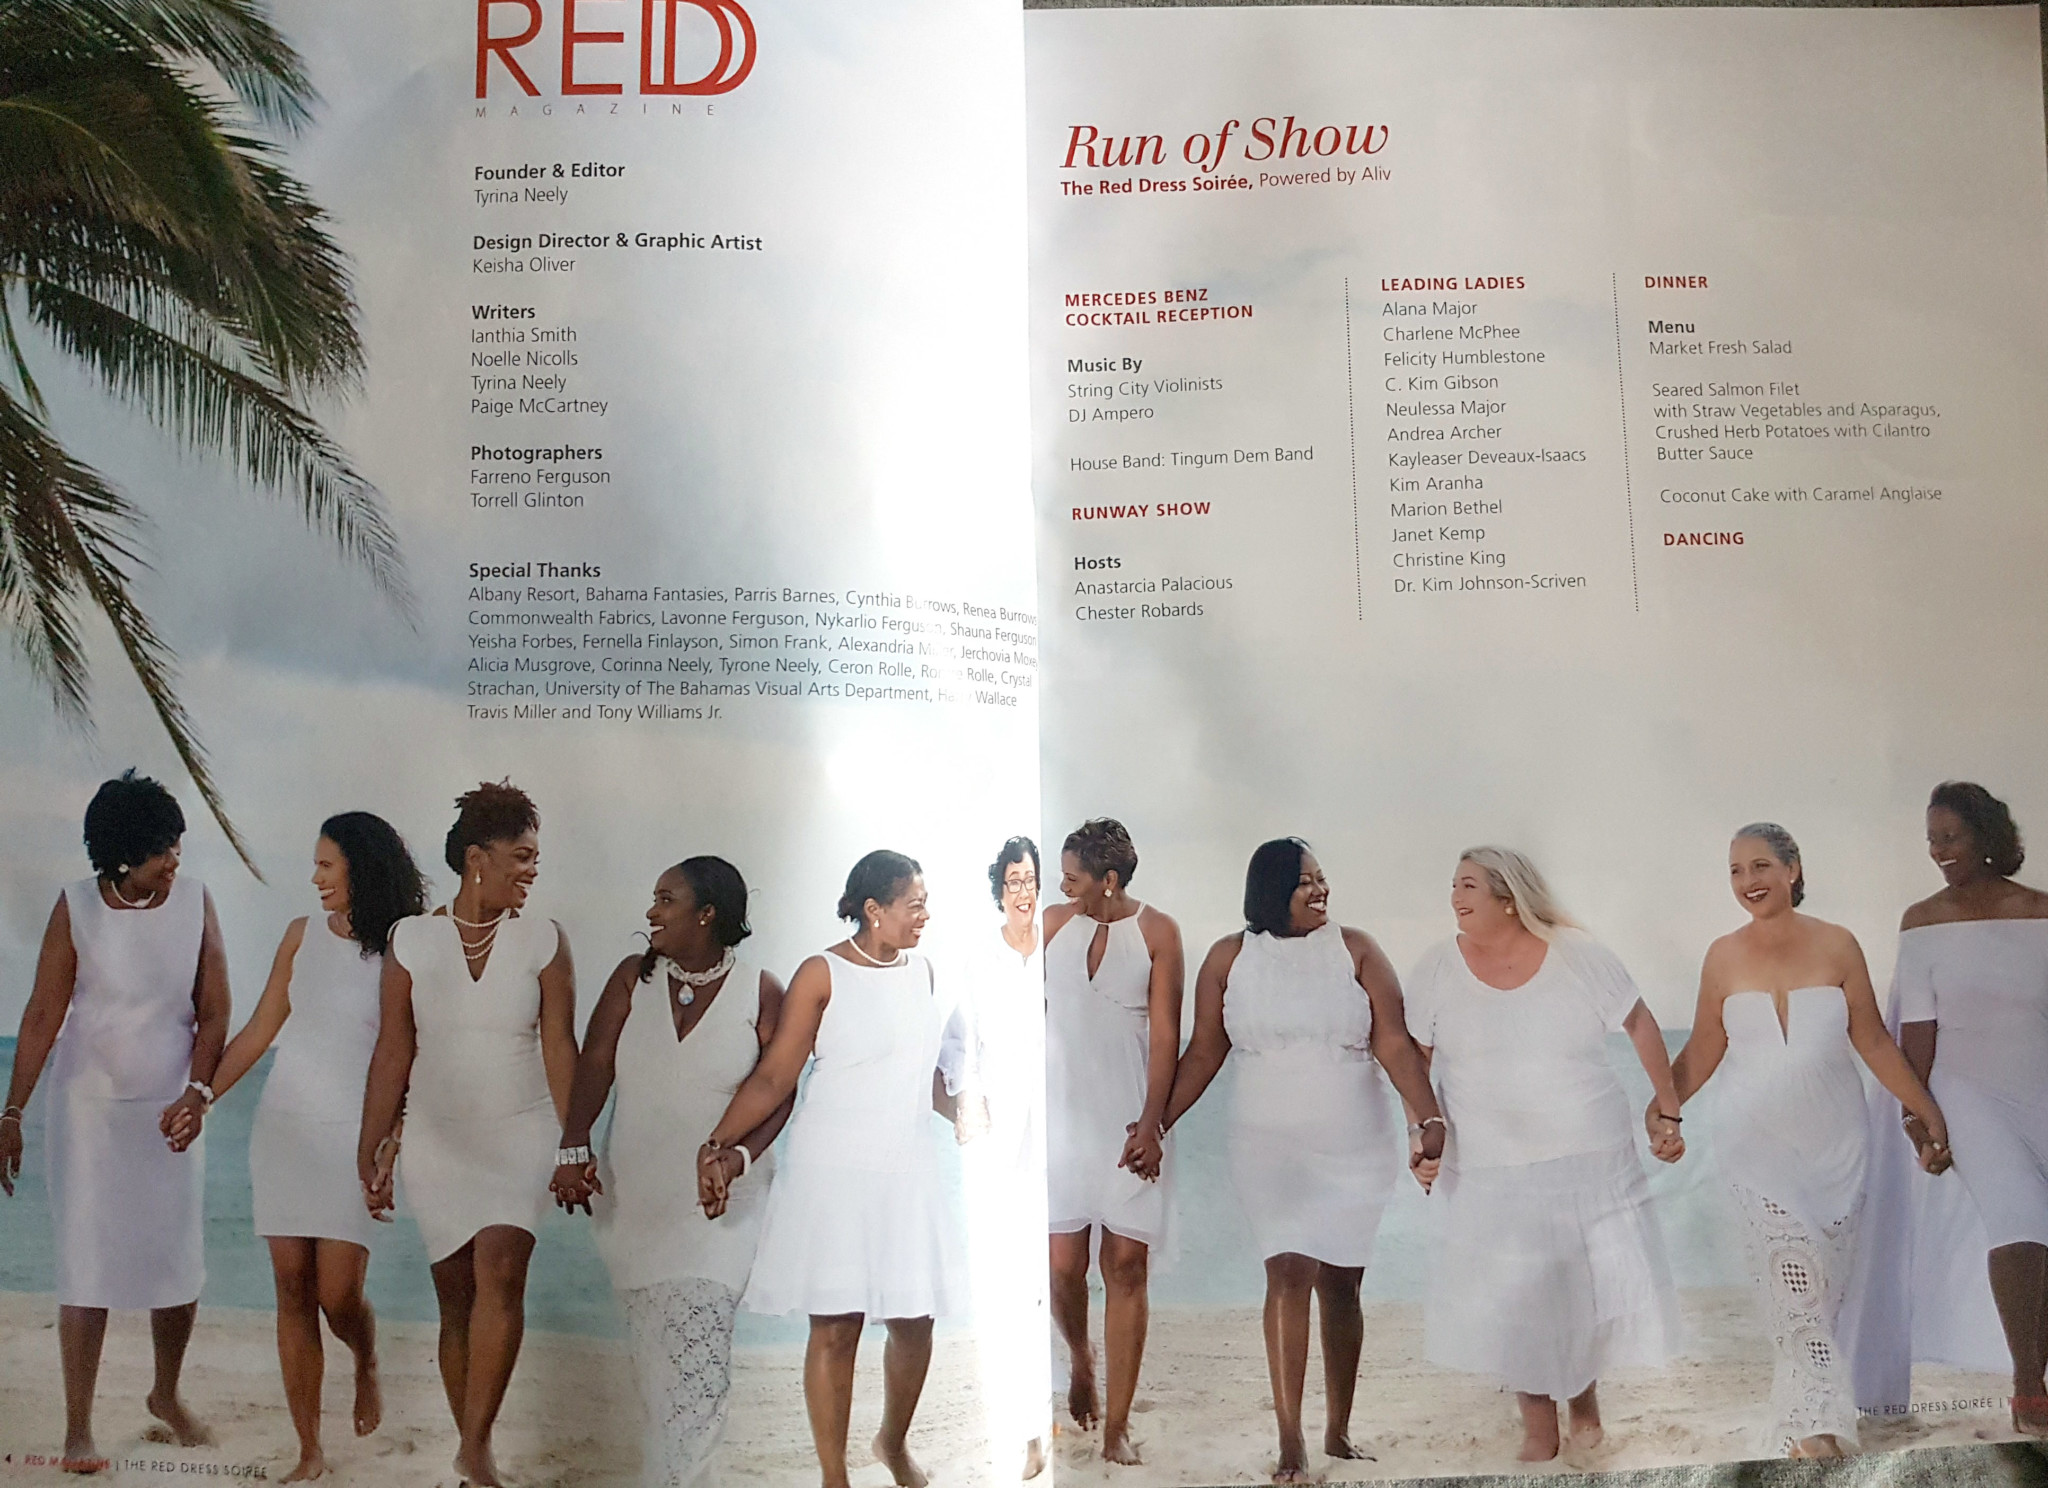 © 2017 F.DoT Photography Caribbean Photographer, Miami Photographer, Portrait Photographer, Wedding Photographer, Swimsuit Photographer,High Res Images, Bahamas Photographer, Editorial Photographer, Fashion, New Born Photography.